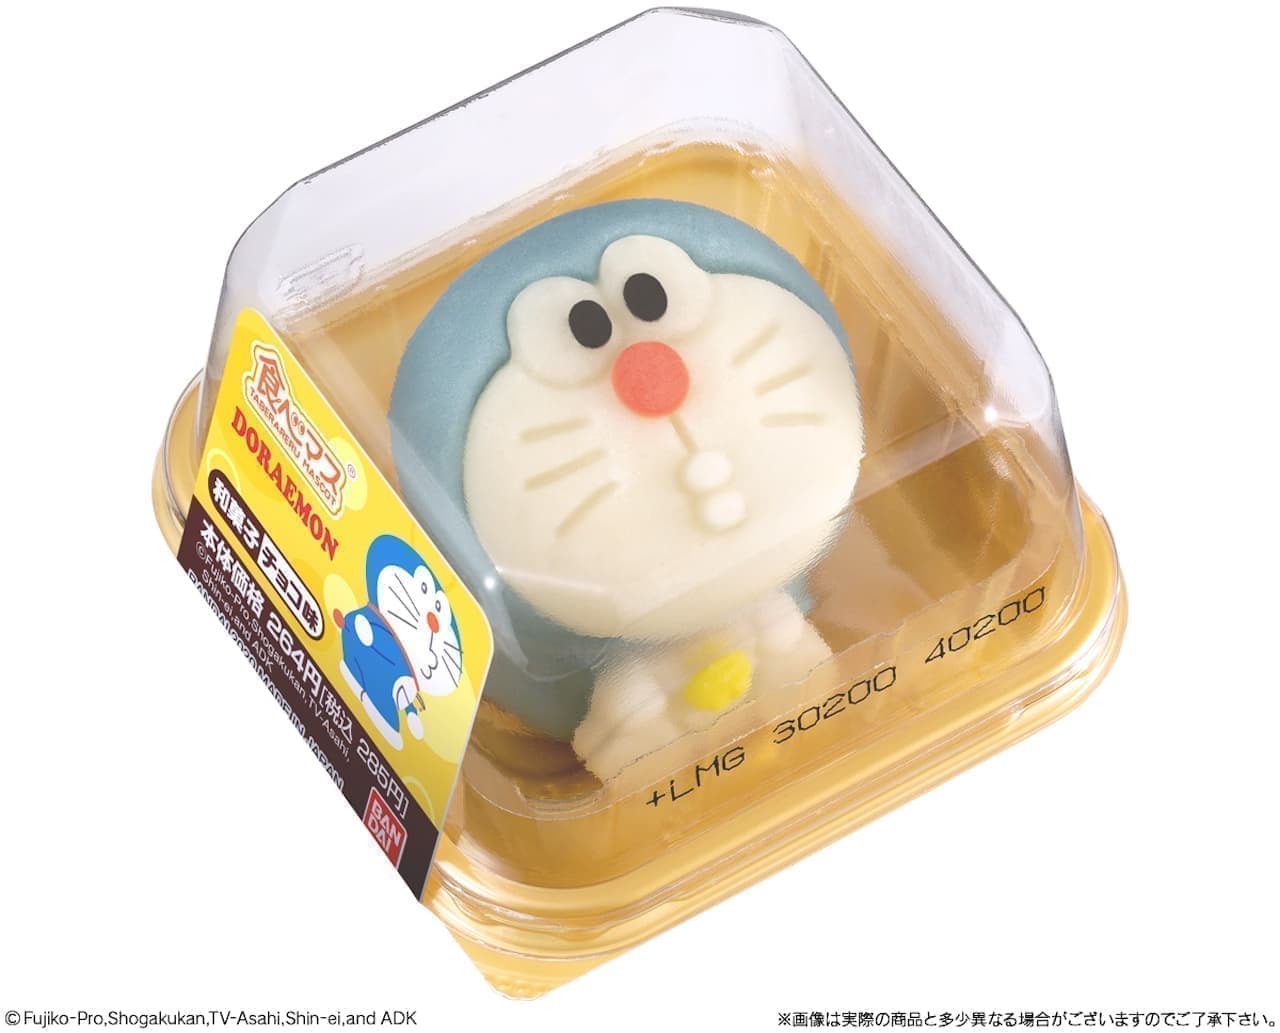 "Eat trout Doraemon 2020" to celebrate the 50th anniversary of Doraemon serialization